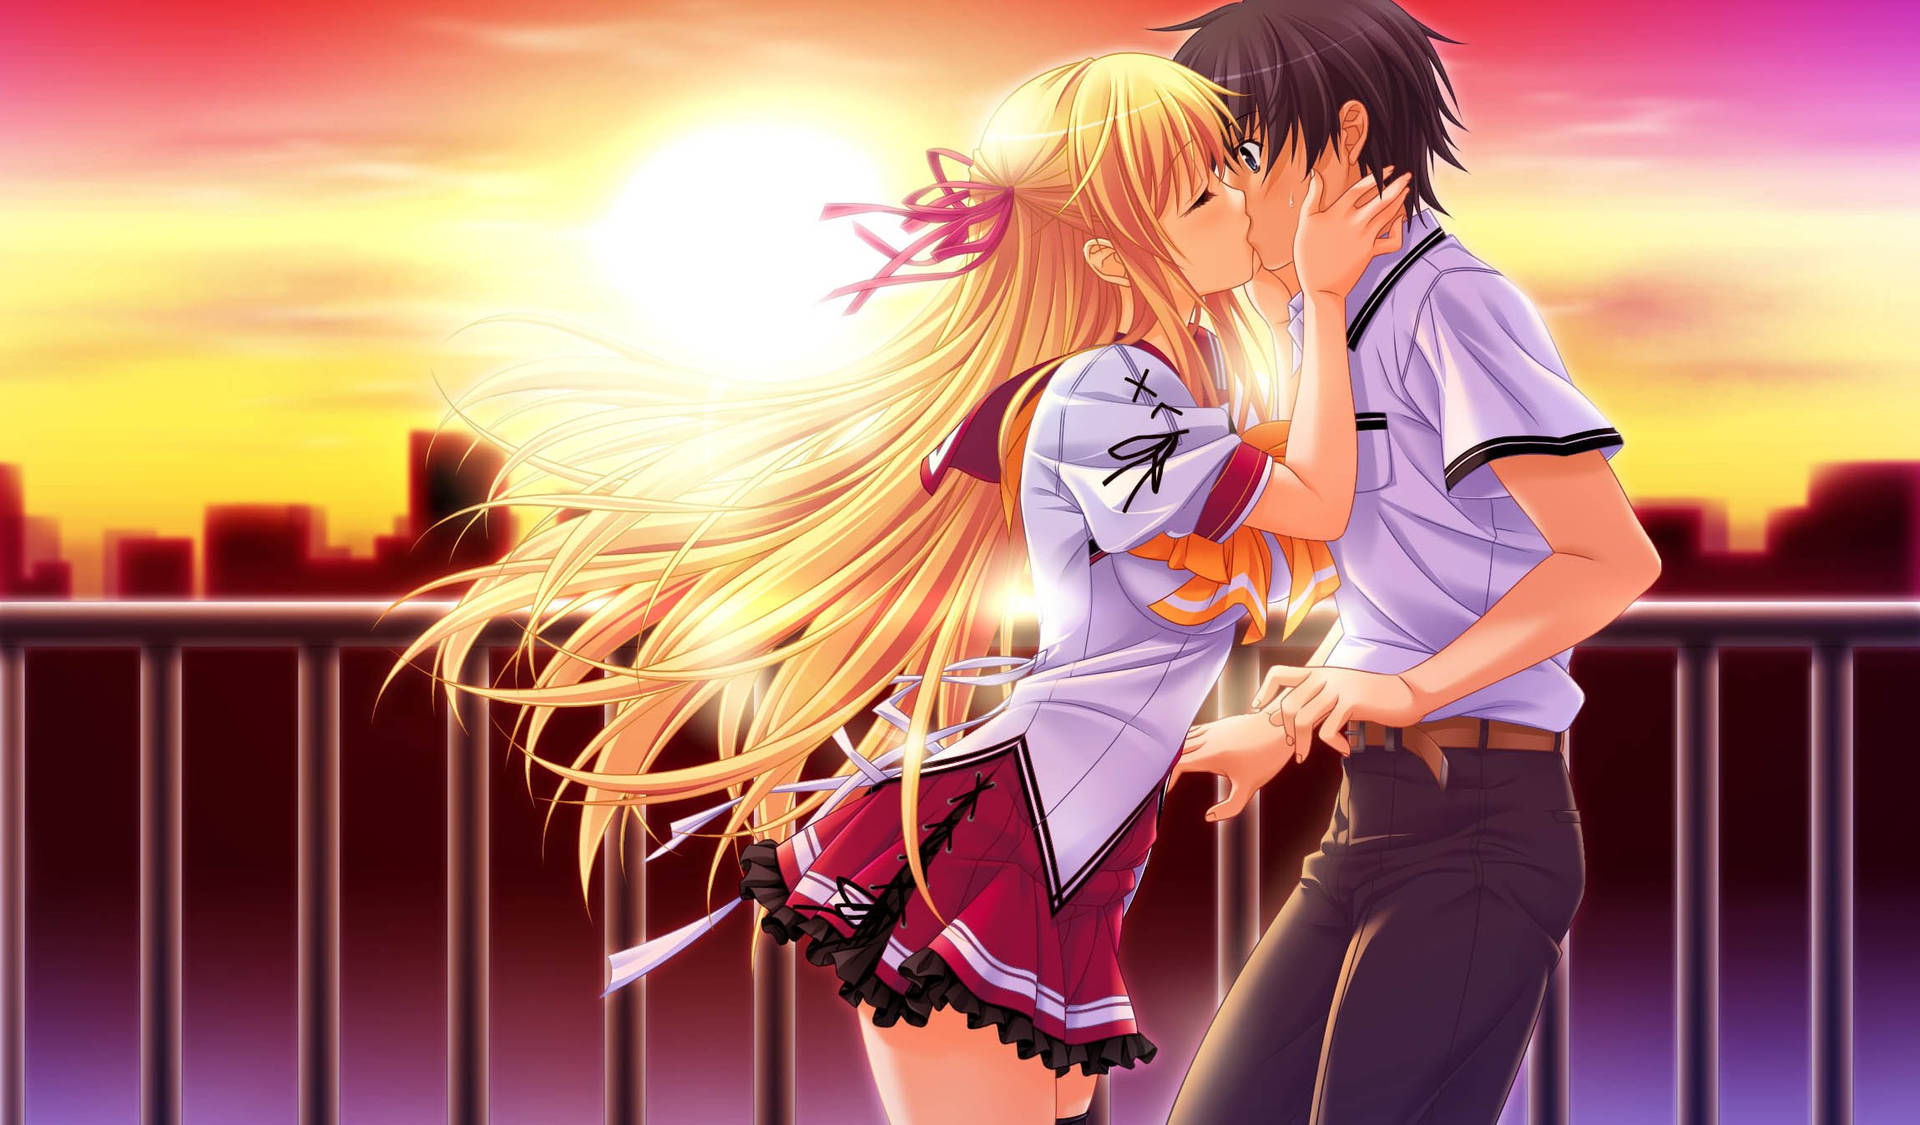 Anime Couple Kiss During Beautiful Sunset Wallpaper